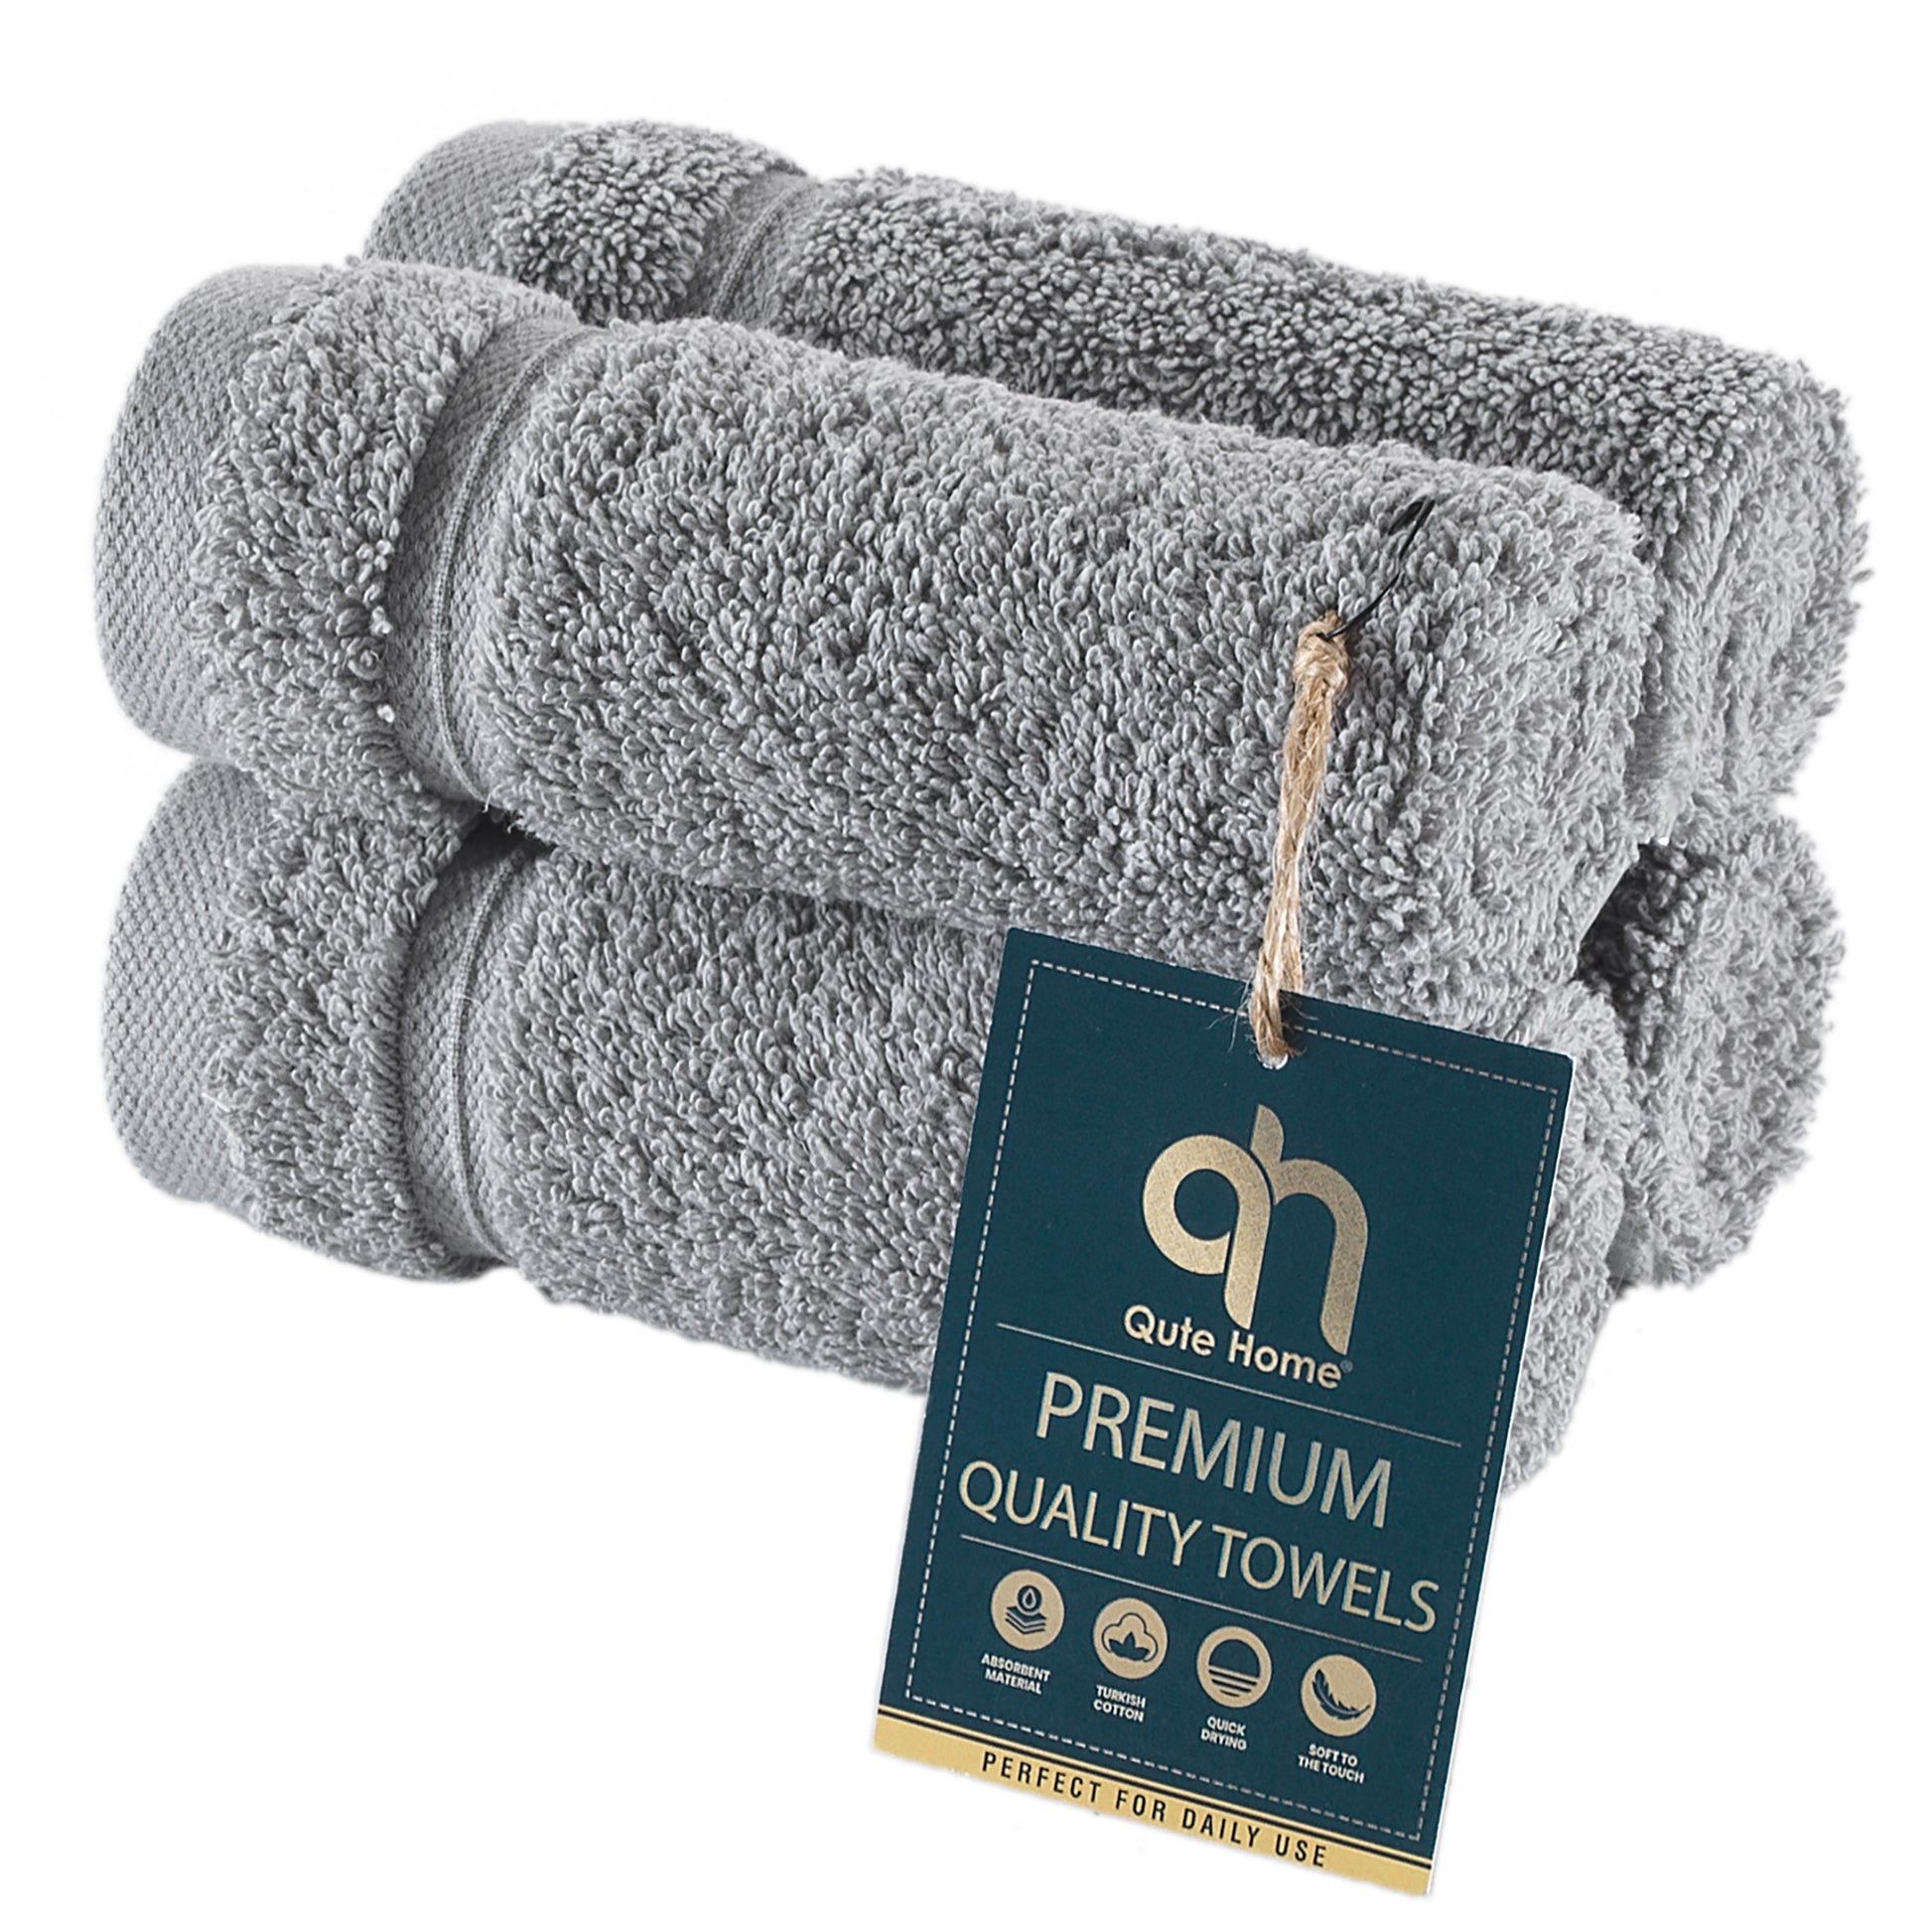 Qute Home 6-Piece Bath Towels Set, 100% Turkish Cotton Premium Quality  Bathroom Towels, Soft and Absorbent Turkish Towels, Set Includes 2 Bath  Towels